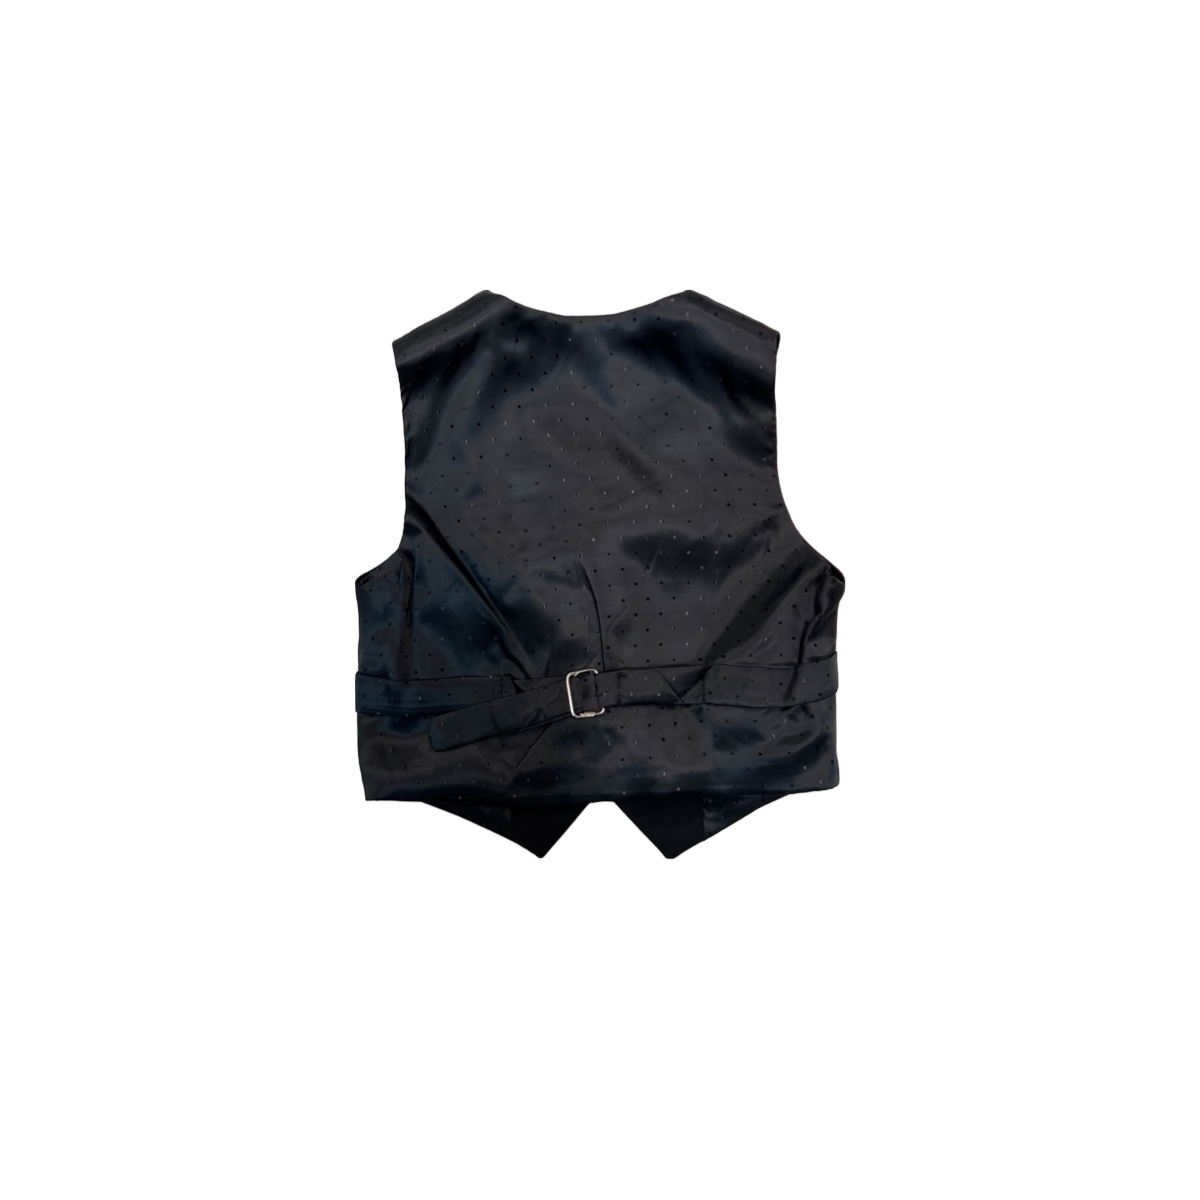 Fouger U.S.A. Slim/Modern Fit 3-Piece Baby Black Suit